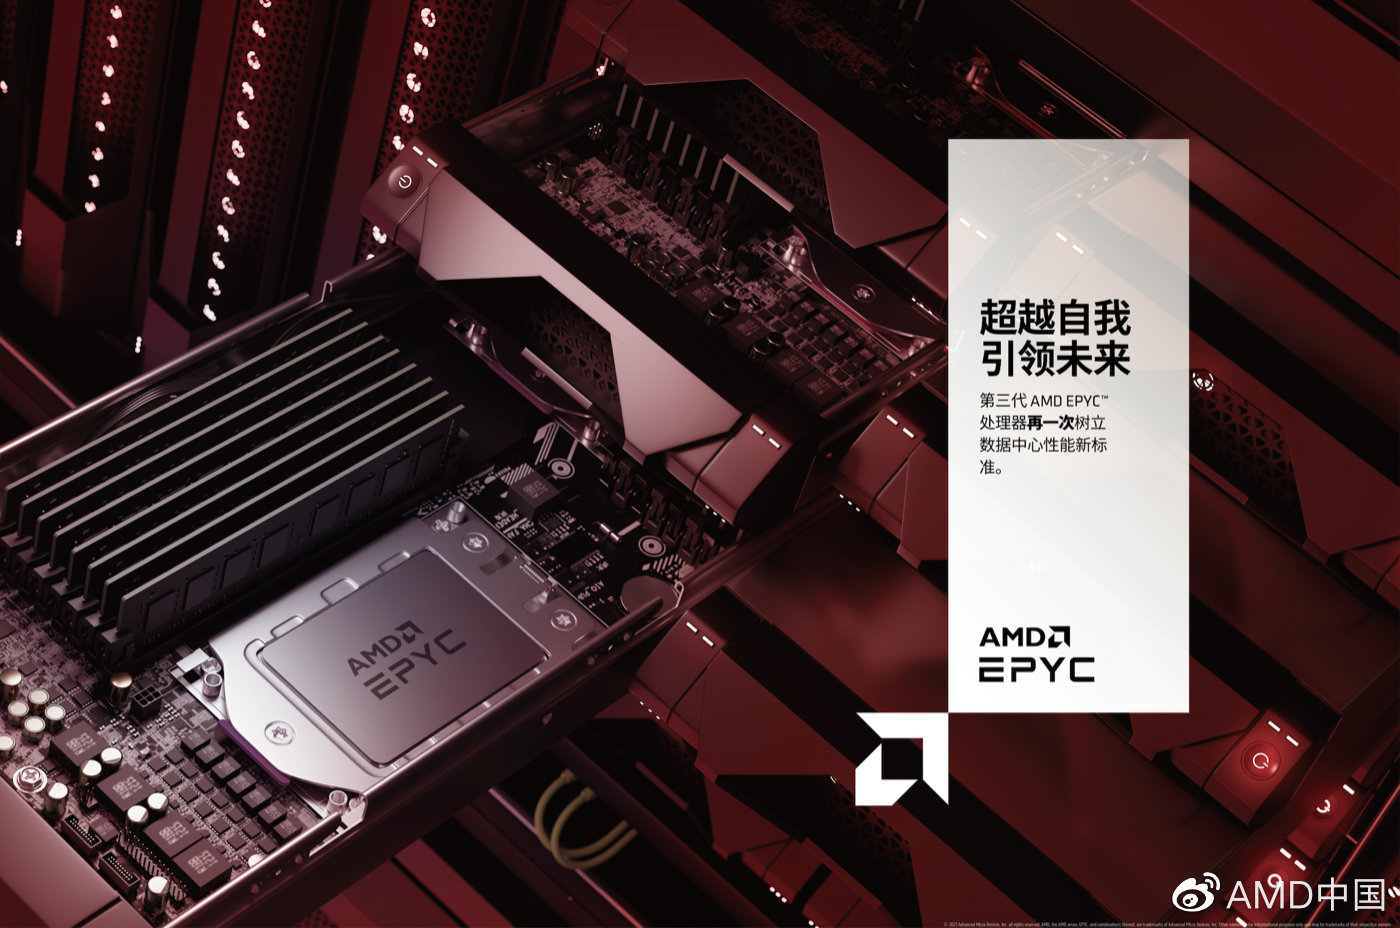 AMD EPYC 7003 Series CPUs img1